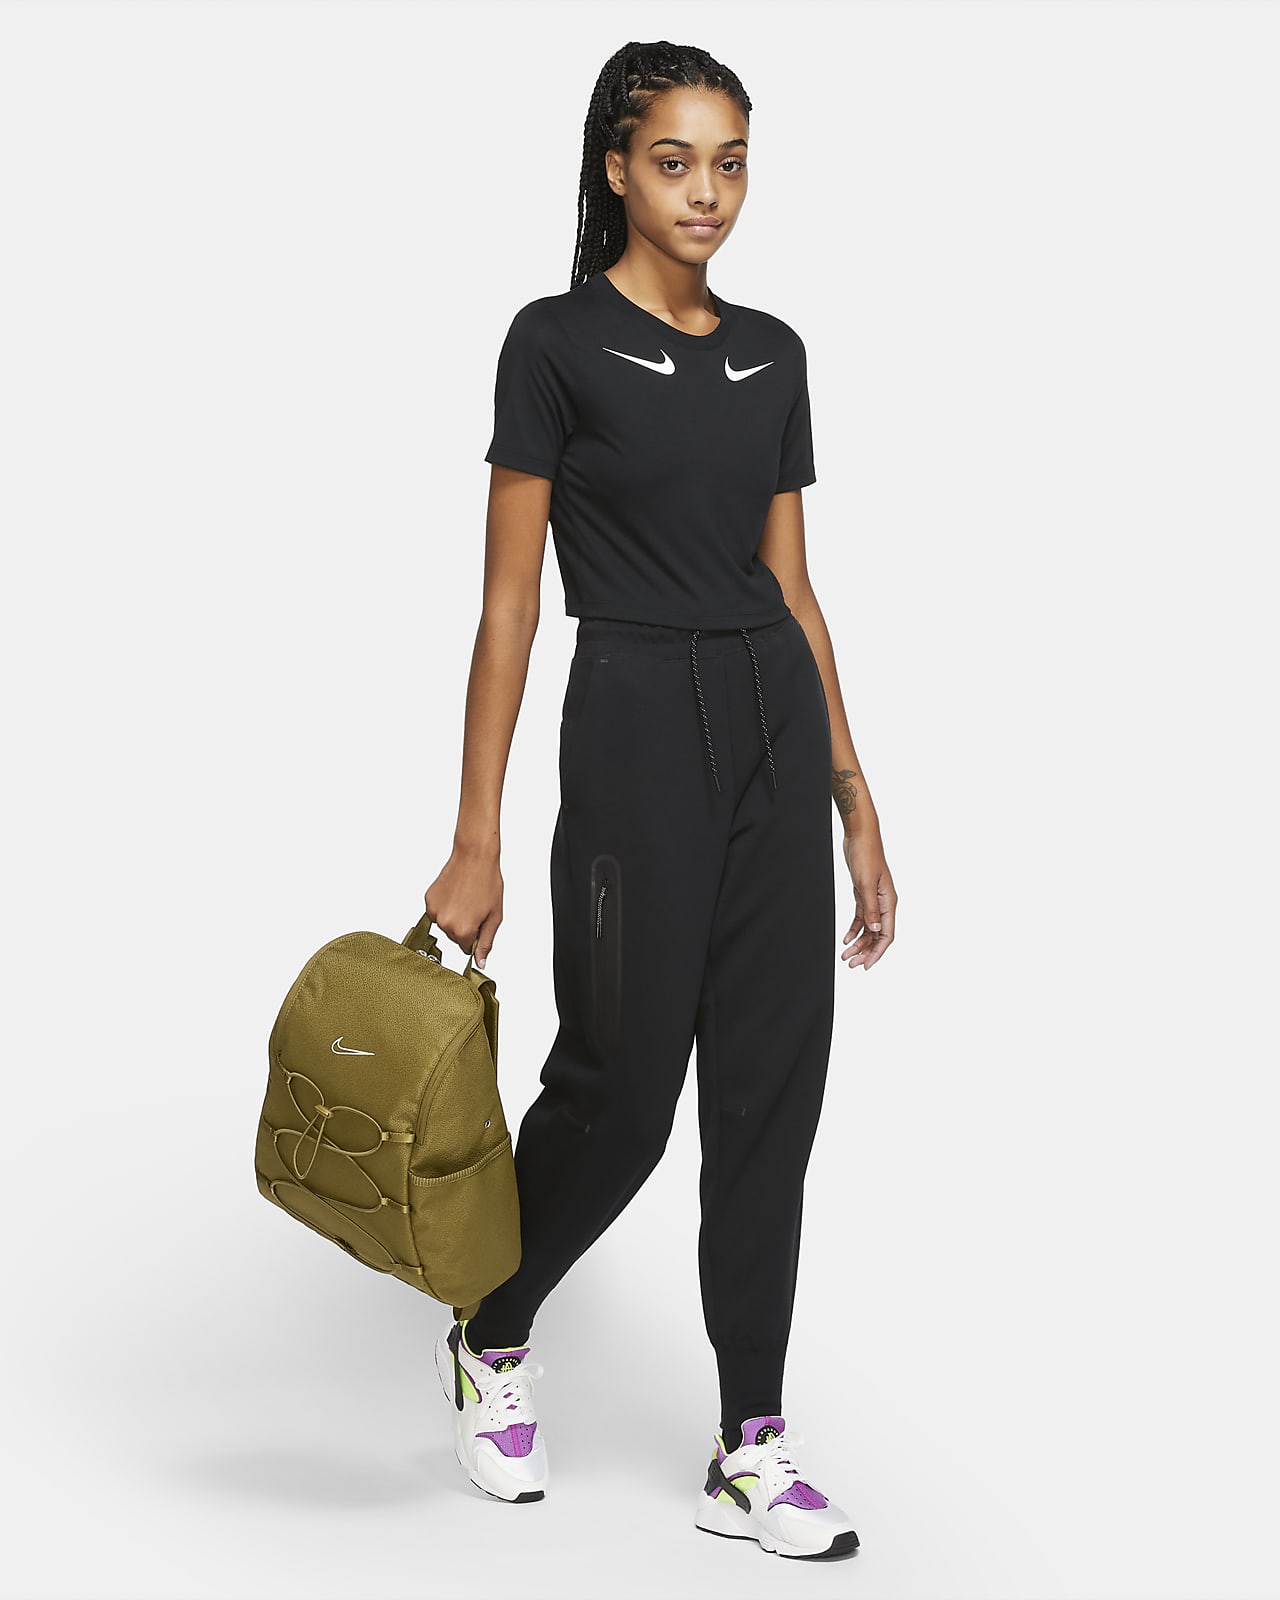 Nike One Tote Bag - Barely Green/Mint Foam - Women's - One Size